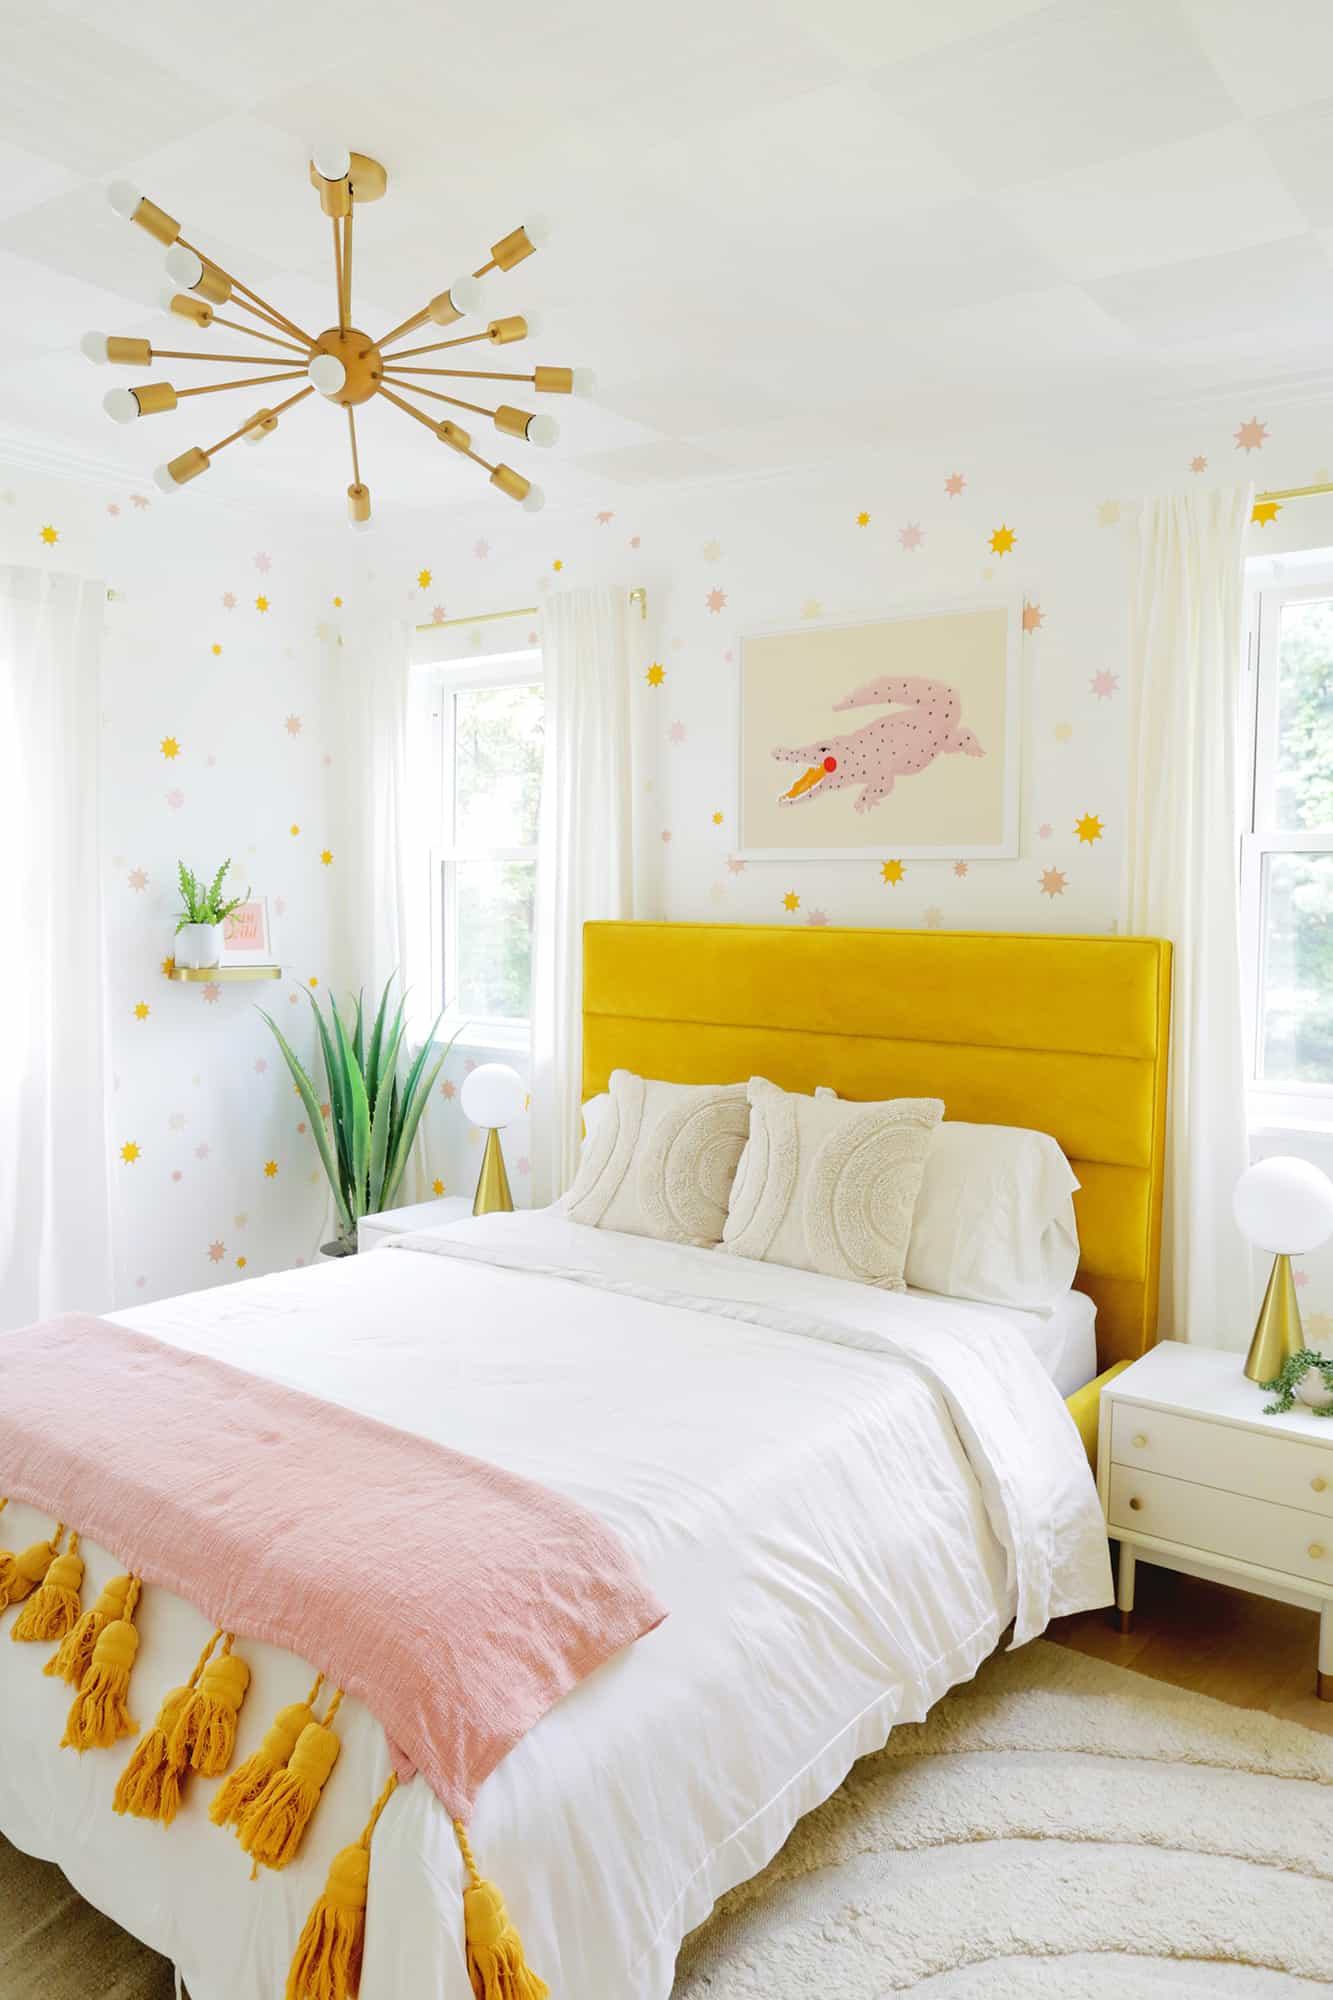 velvet bedframe with pillows and star wallpaper